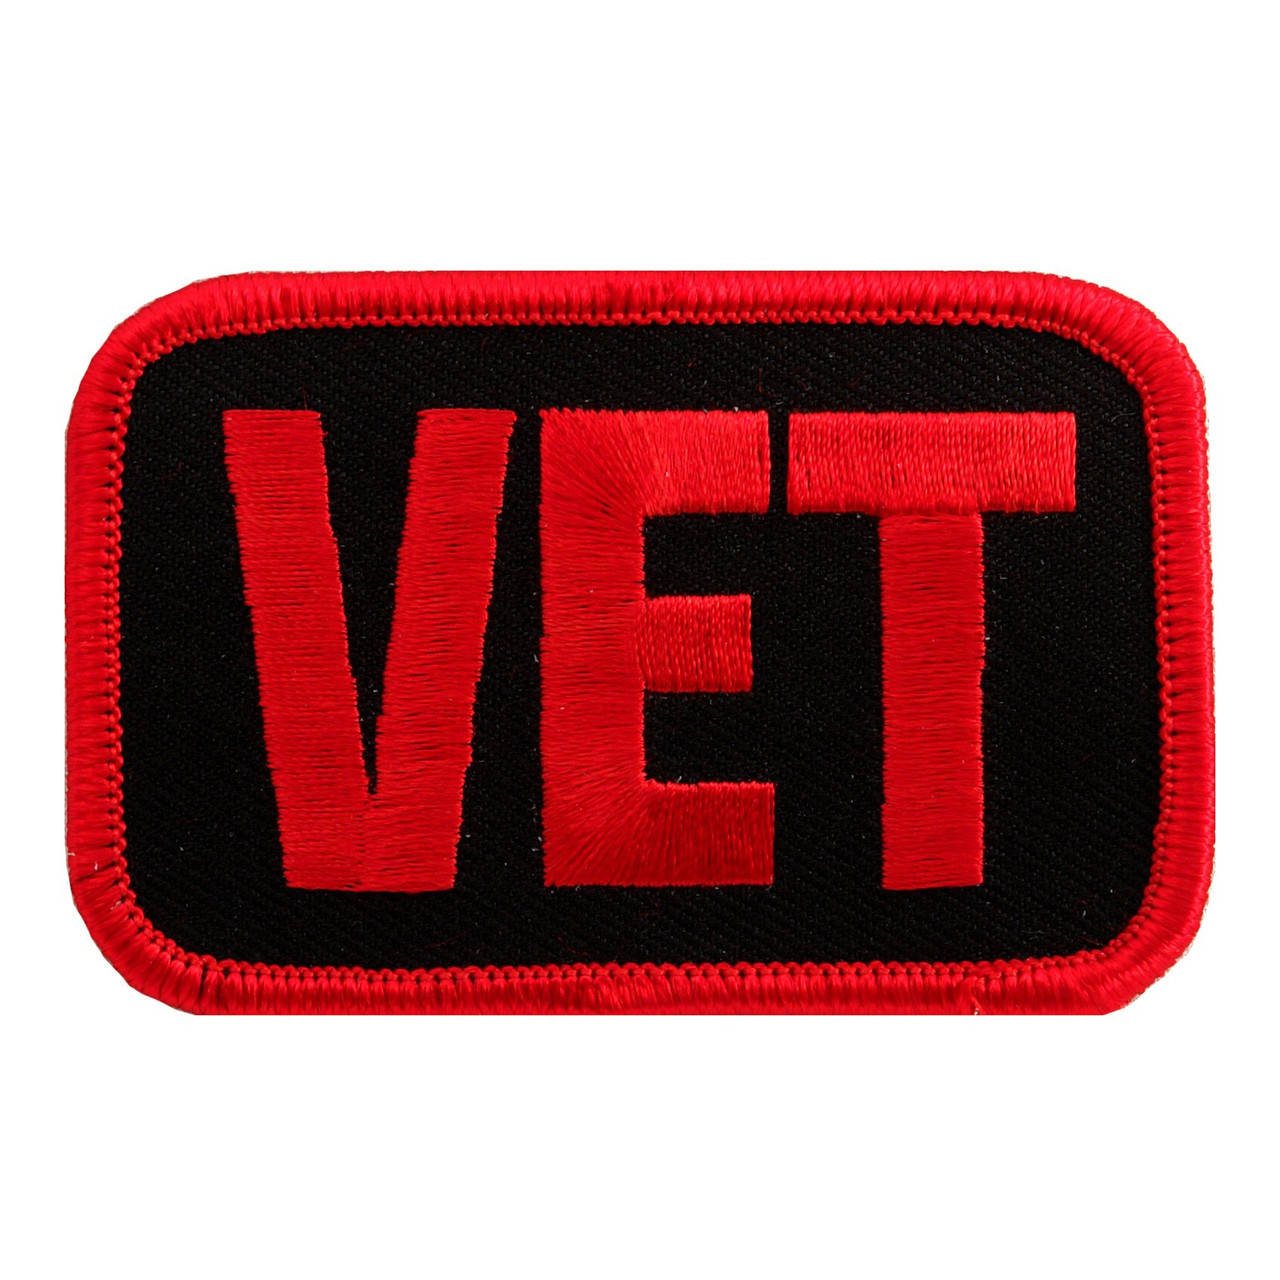 Vet (Red) - PatchAddict